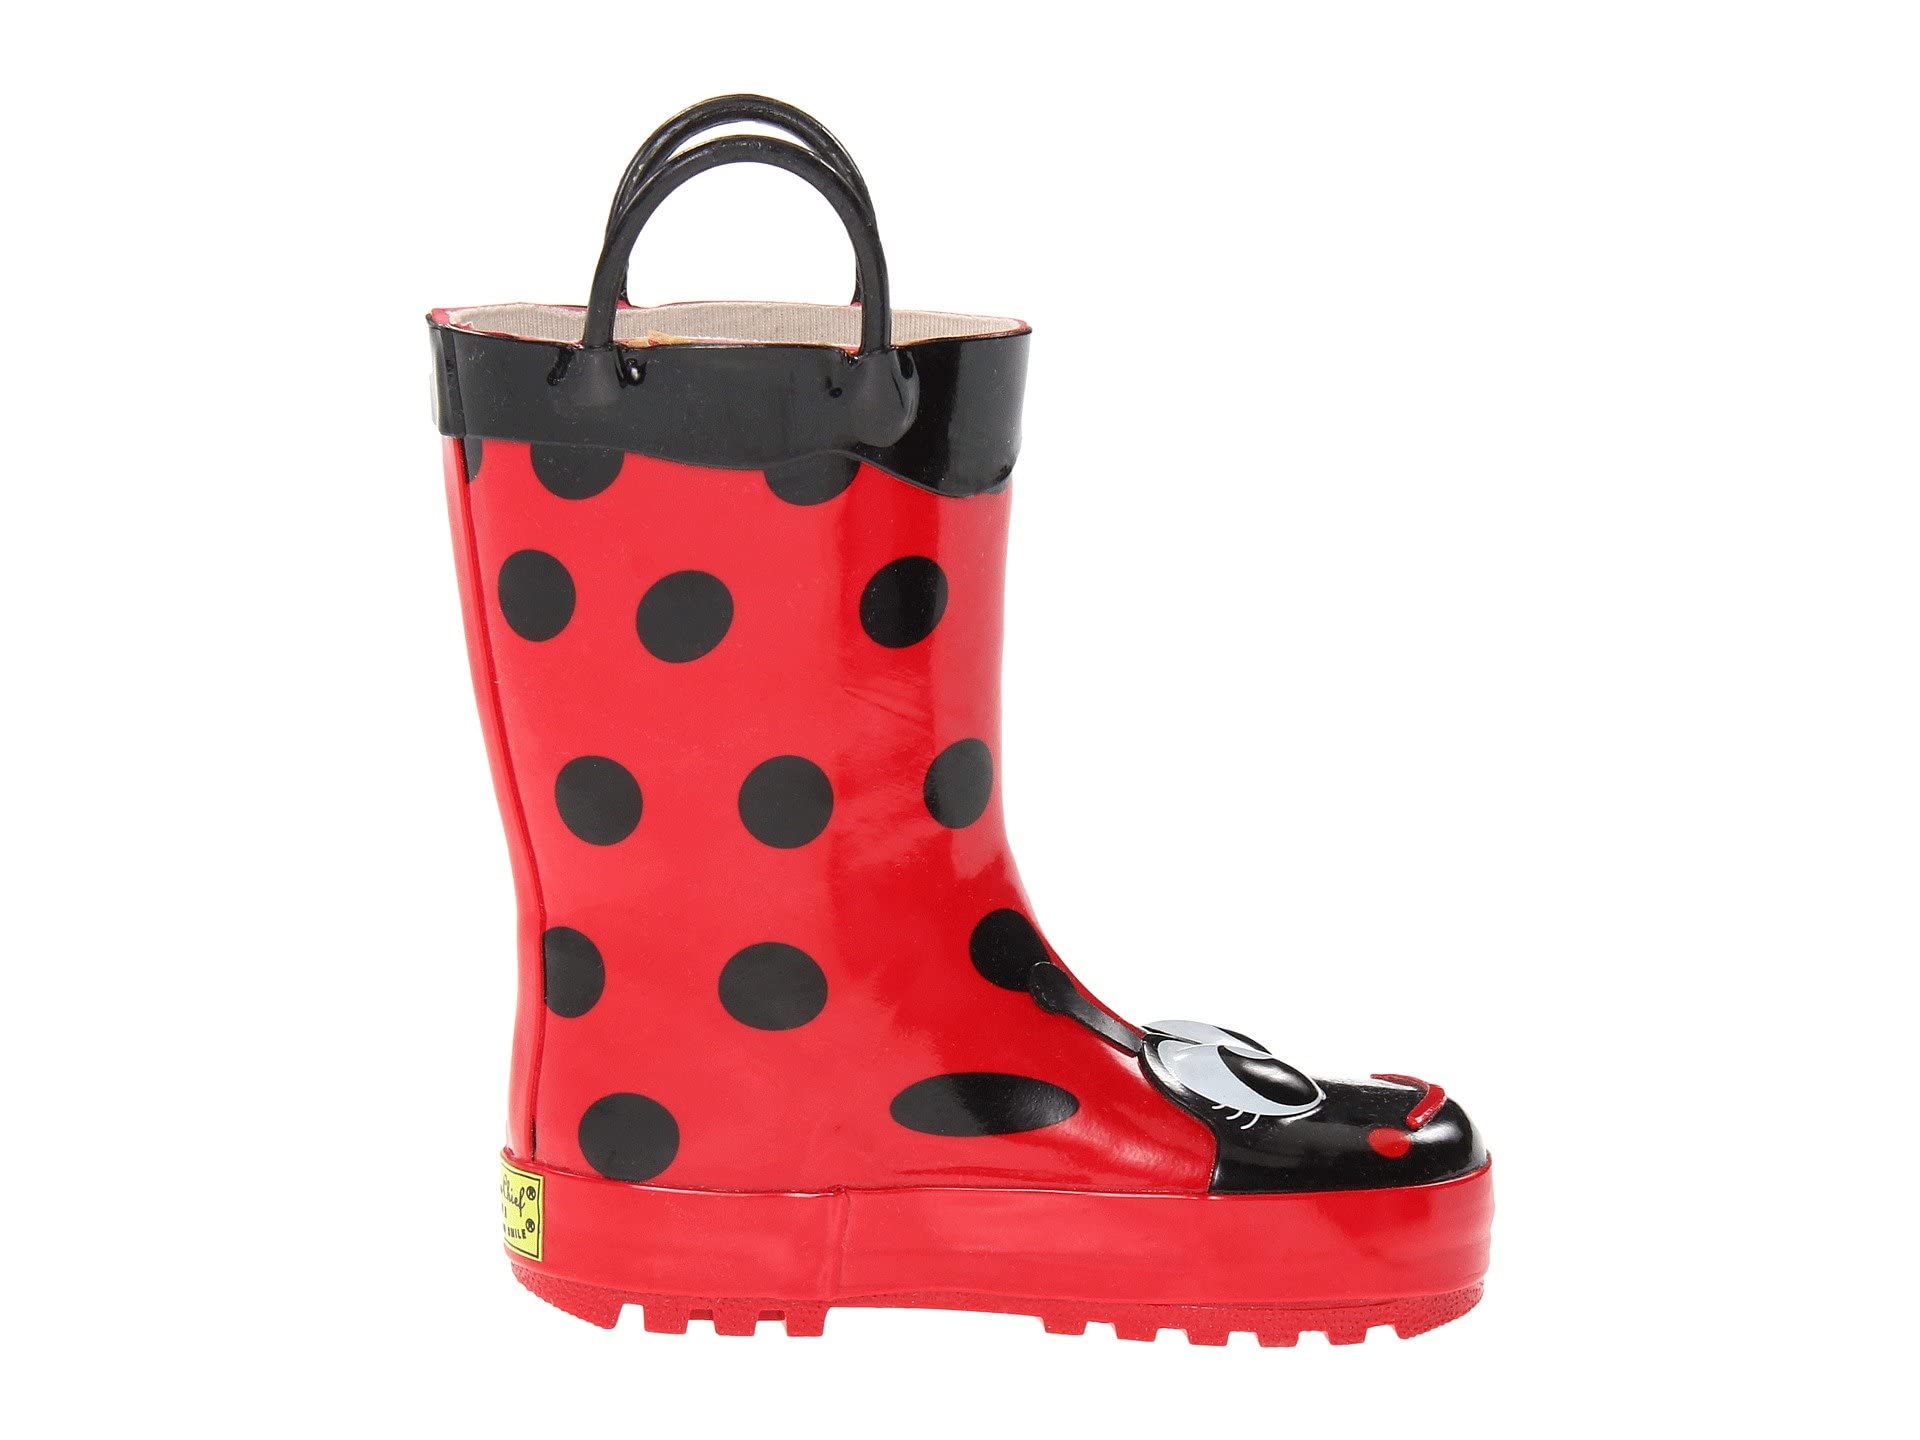 Western Chief Girls Waterproof Printed Rain Boot with Easy Pull on Handles